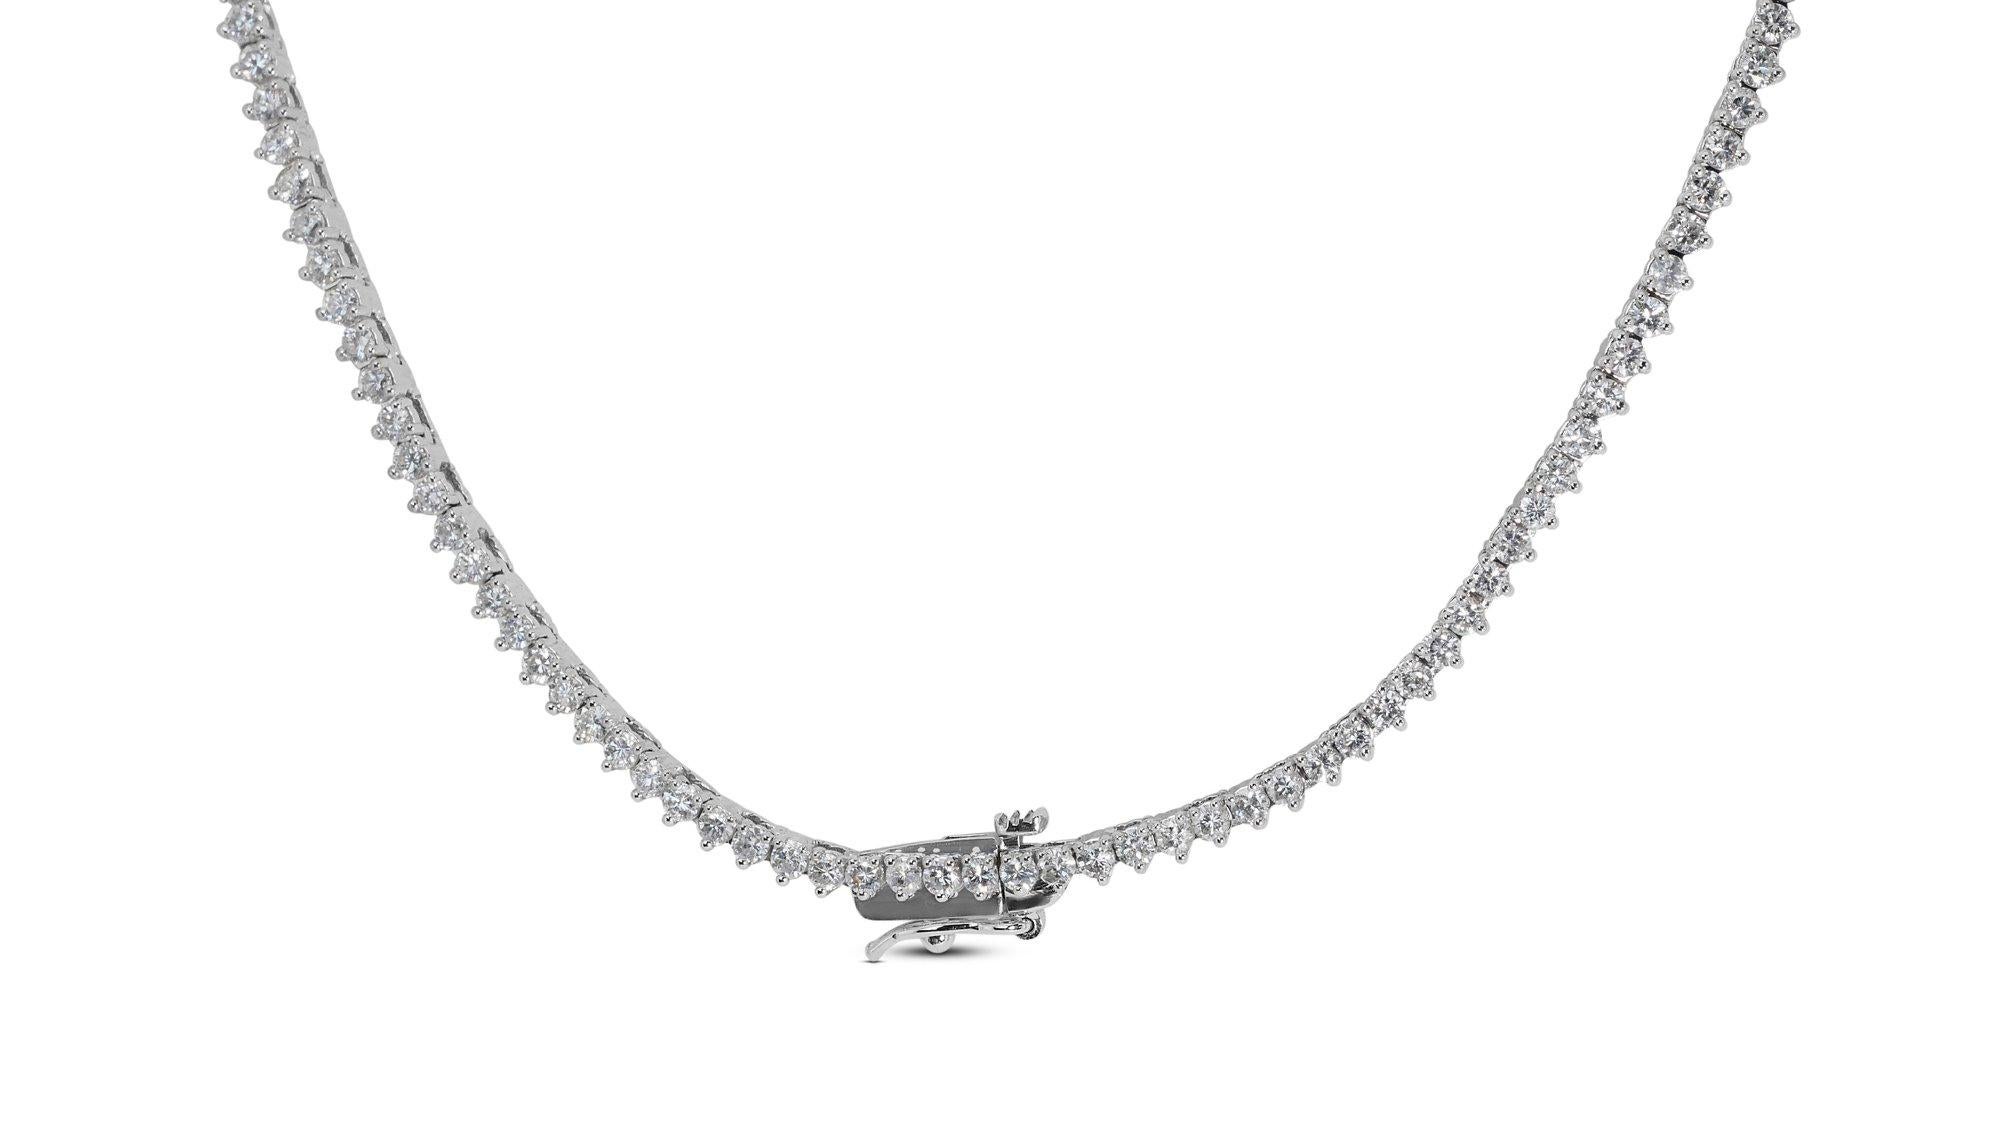 Ravishing 14k White Gold Necklace w/ 8.36 ct Natural Diamonds IGI Certificate For Sale 10